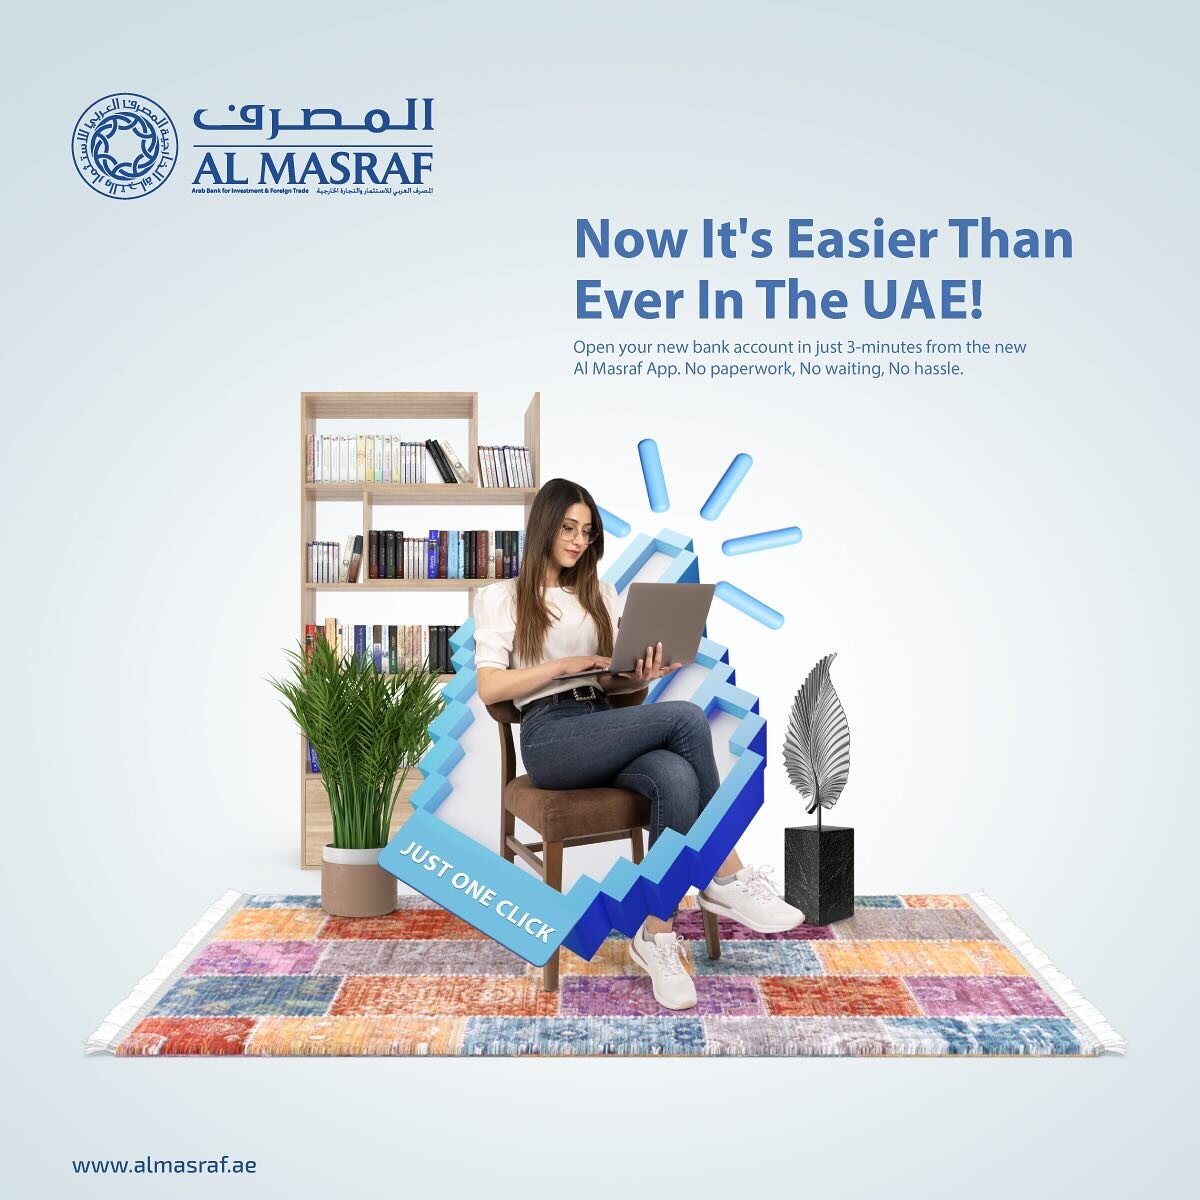 Happy to share a campaign i did for Almasraf

www.gridartwork.com

#advertising #campaign #ads #socialmedia #saudiarabia #uae #dubai #riyadh #design #artdirection #concept #visual